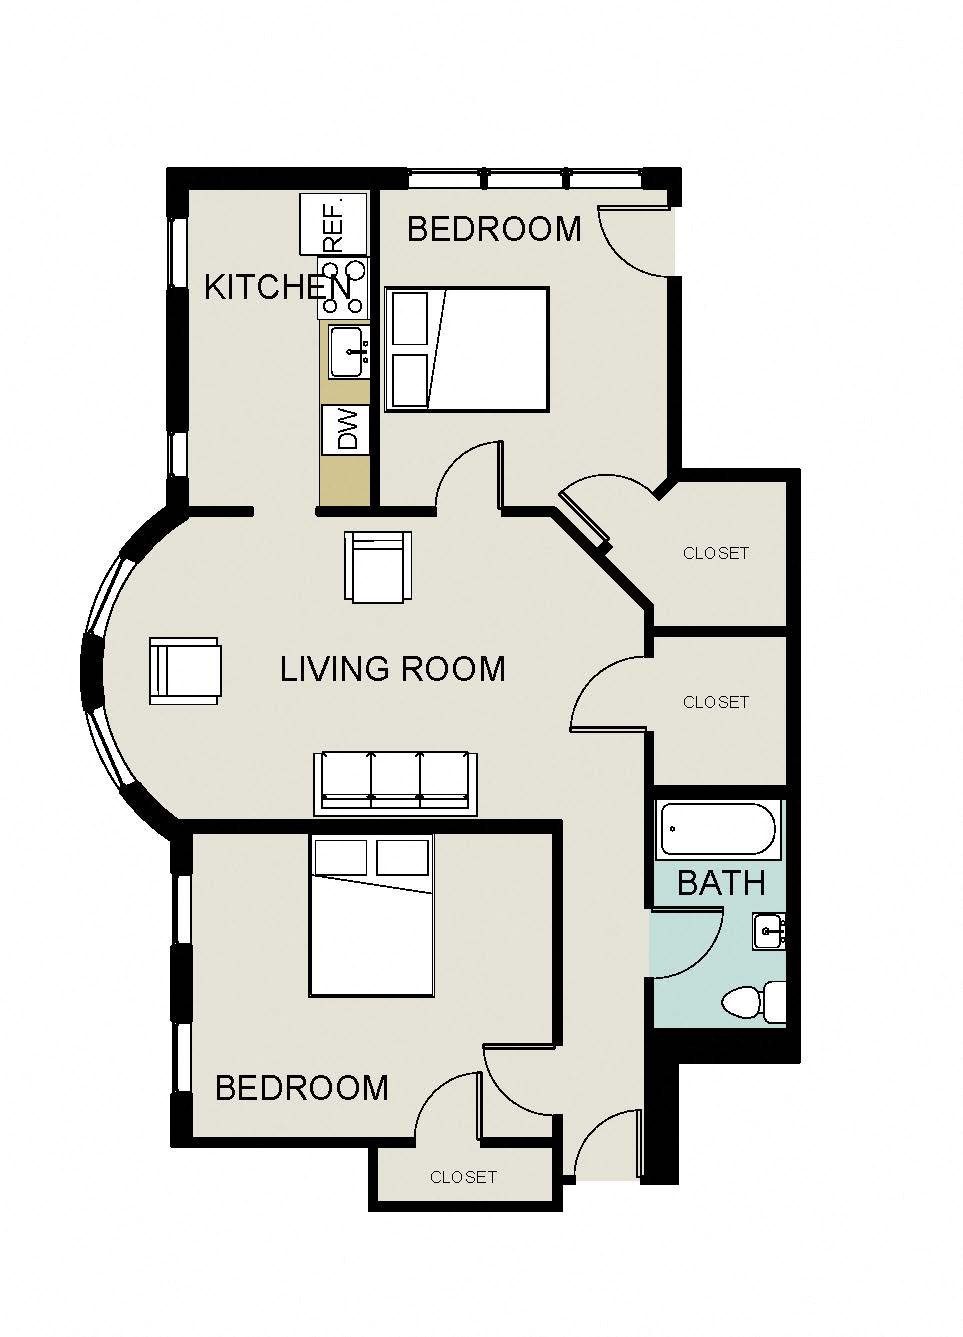 Photos of apartment on Massachusetts,Cambridge MA 02138